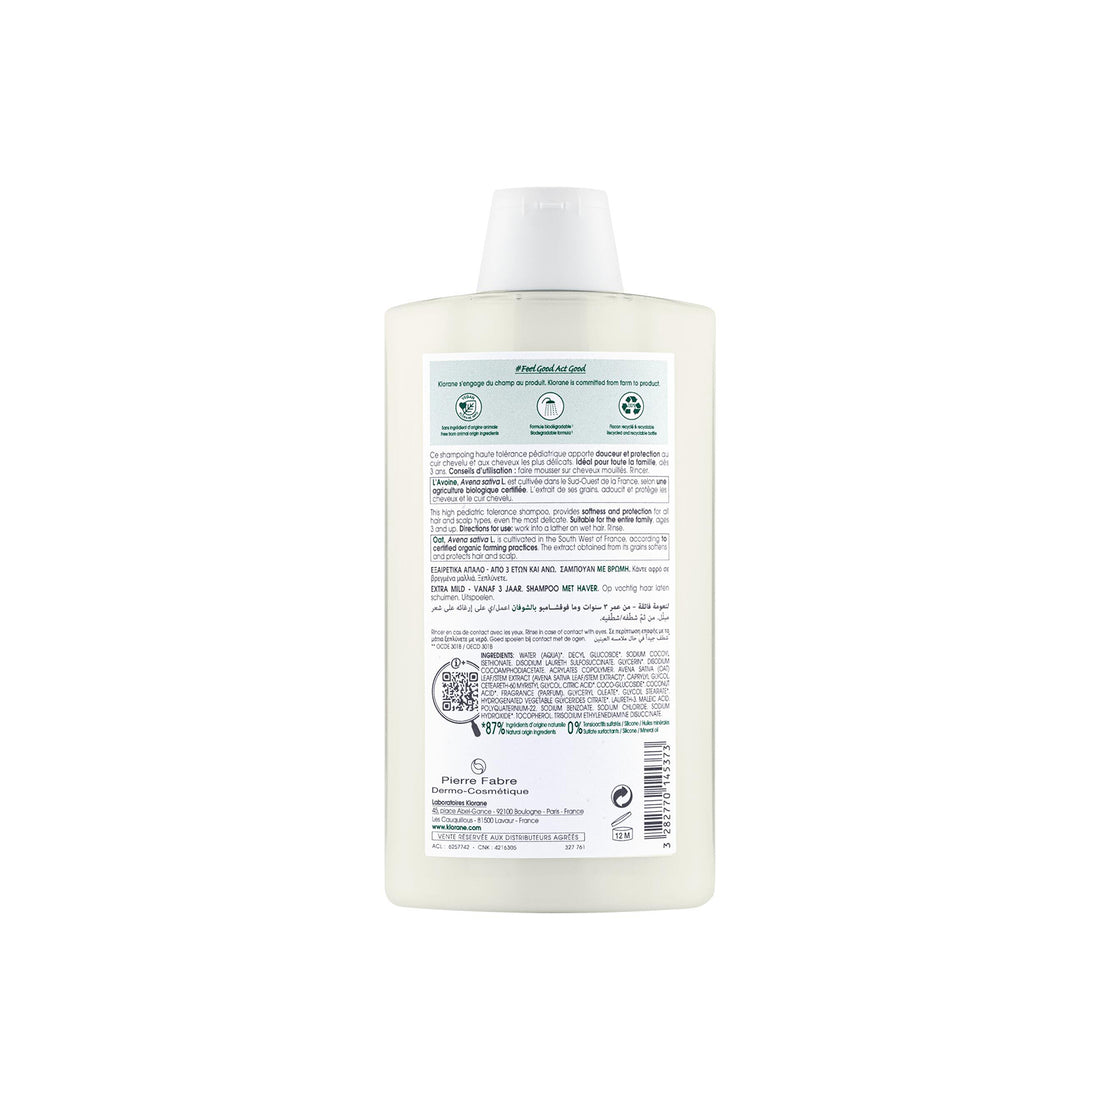 Klorane Ultra-Gentle Shampoo with Oat Milk 400ml (13.53fl oz)